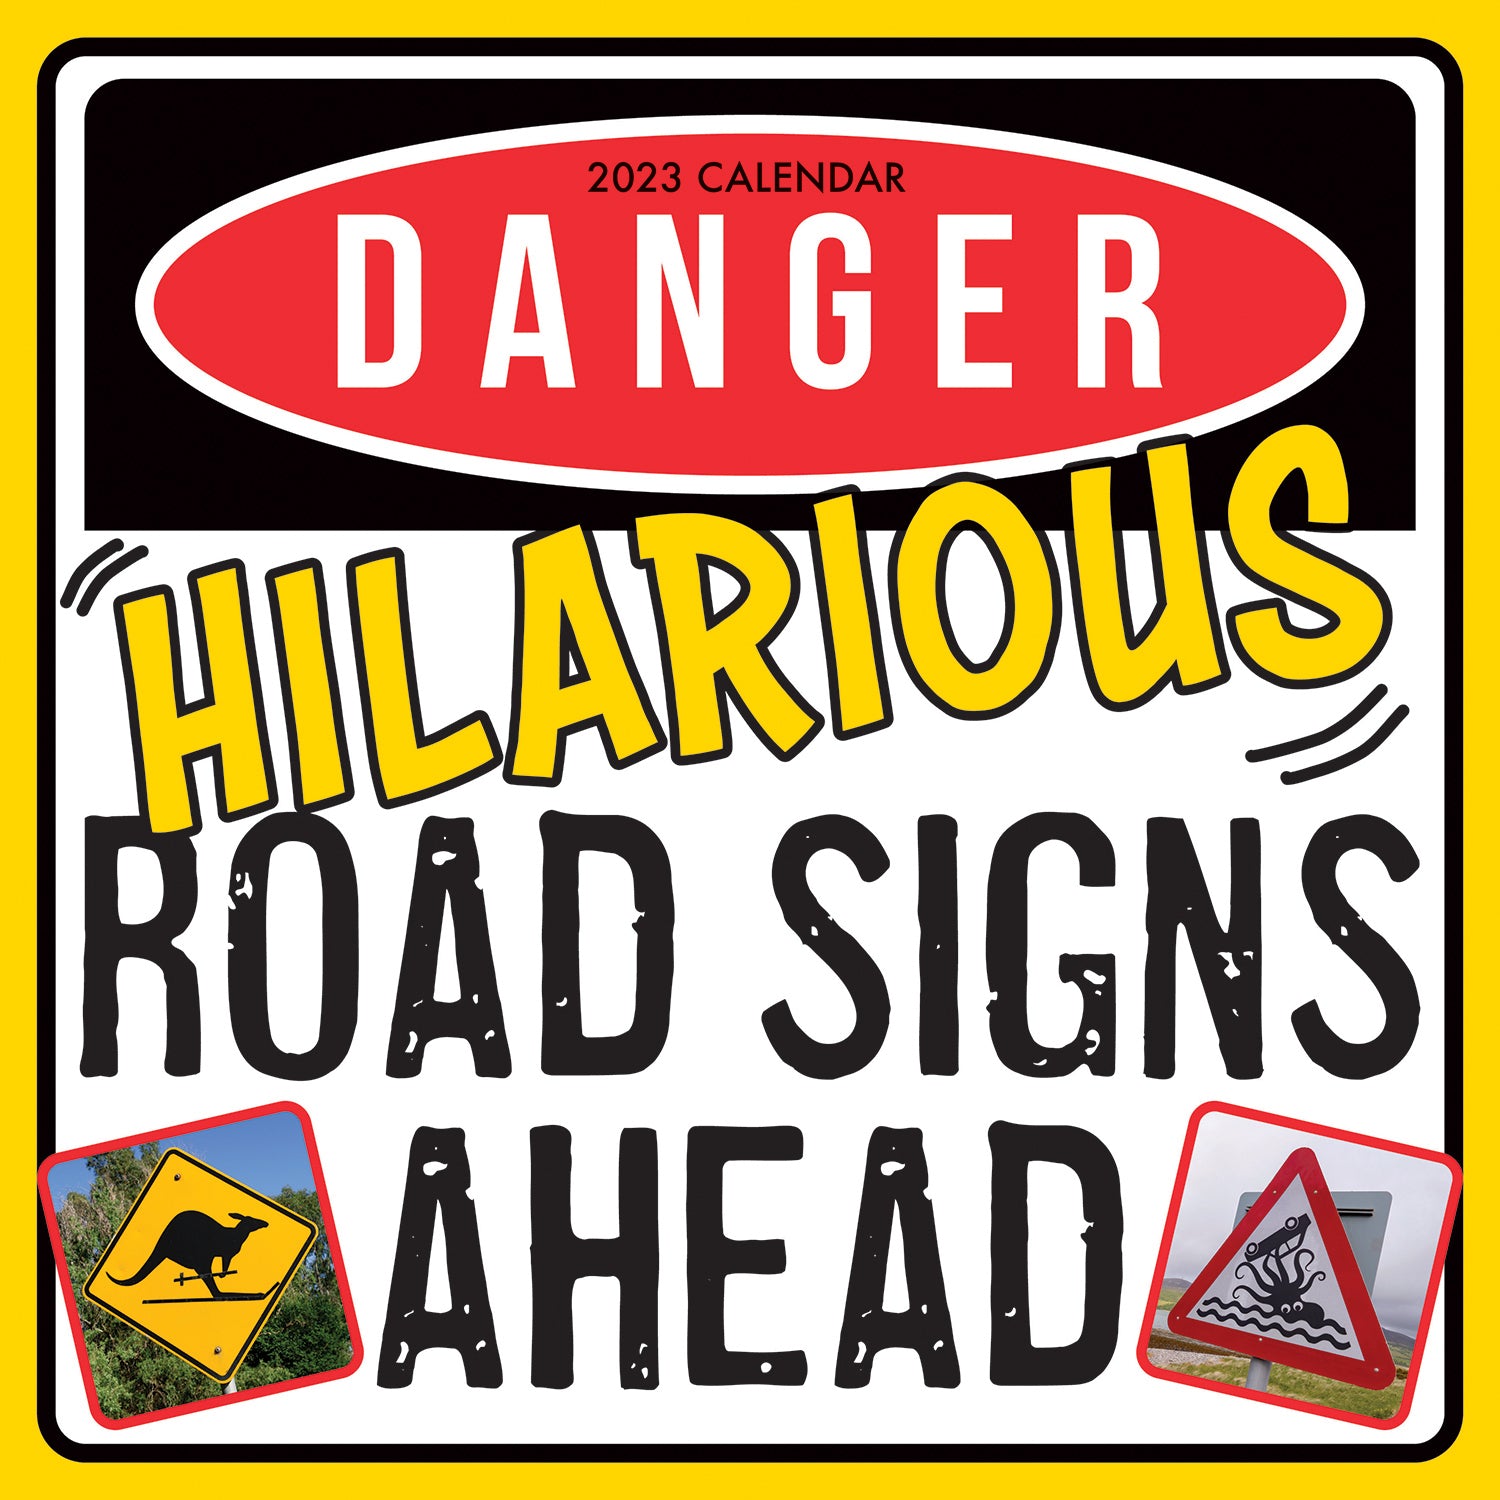 Danger Hilarious Road Signs Ahead - 2023 Square Wall Calendar 16 Months Planner - Zmart Australia